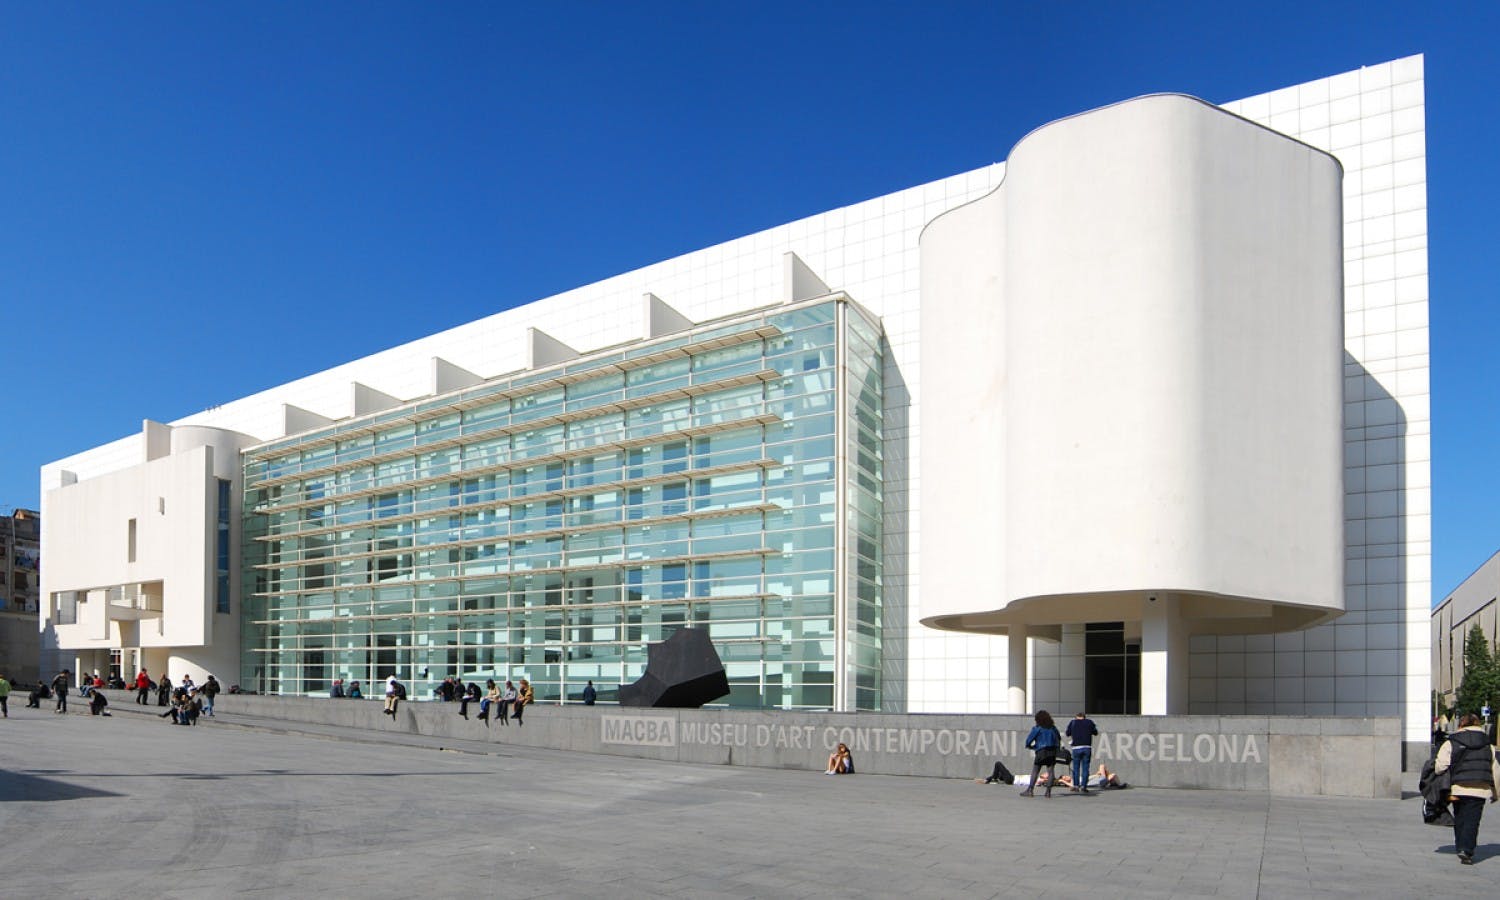 Museum für zeitgenössische Kunst in Barcelona (MACBA)